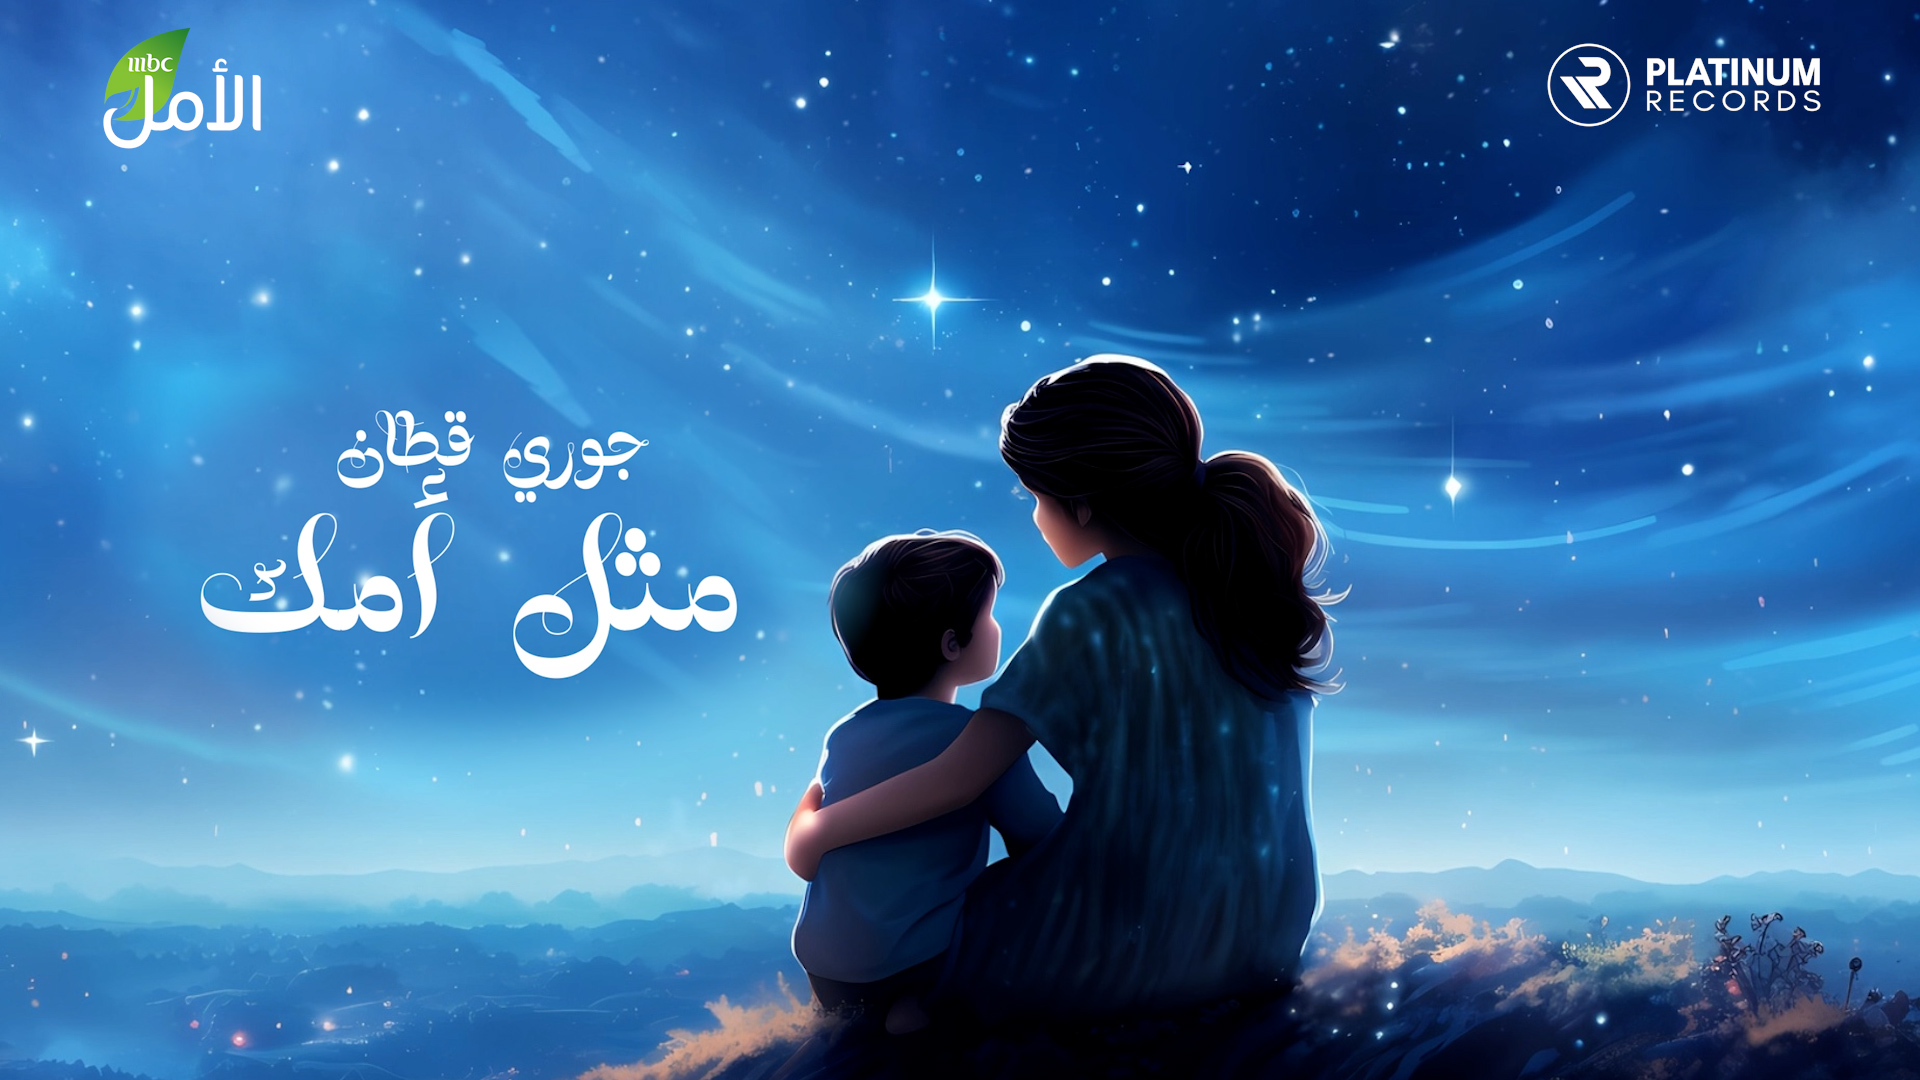 Jori Kattan new mother’s song release “Methl Ummak” - Riyadh, KSA